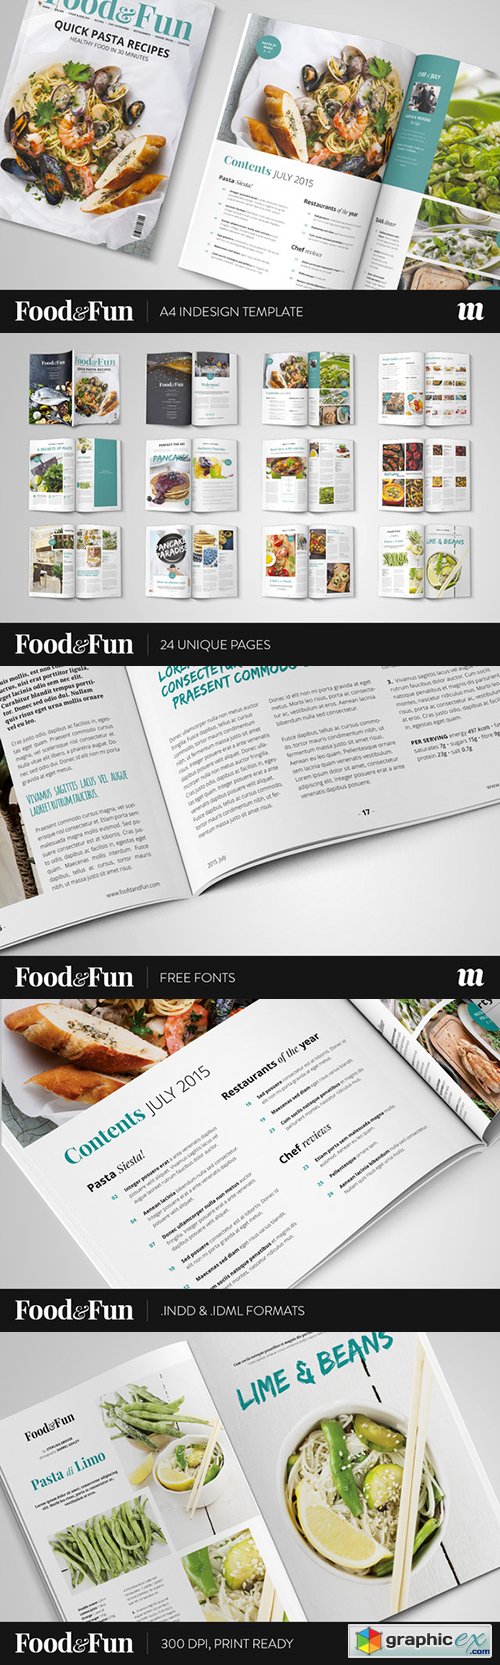 Food&Fun Magazine InDesign Template